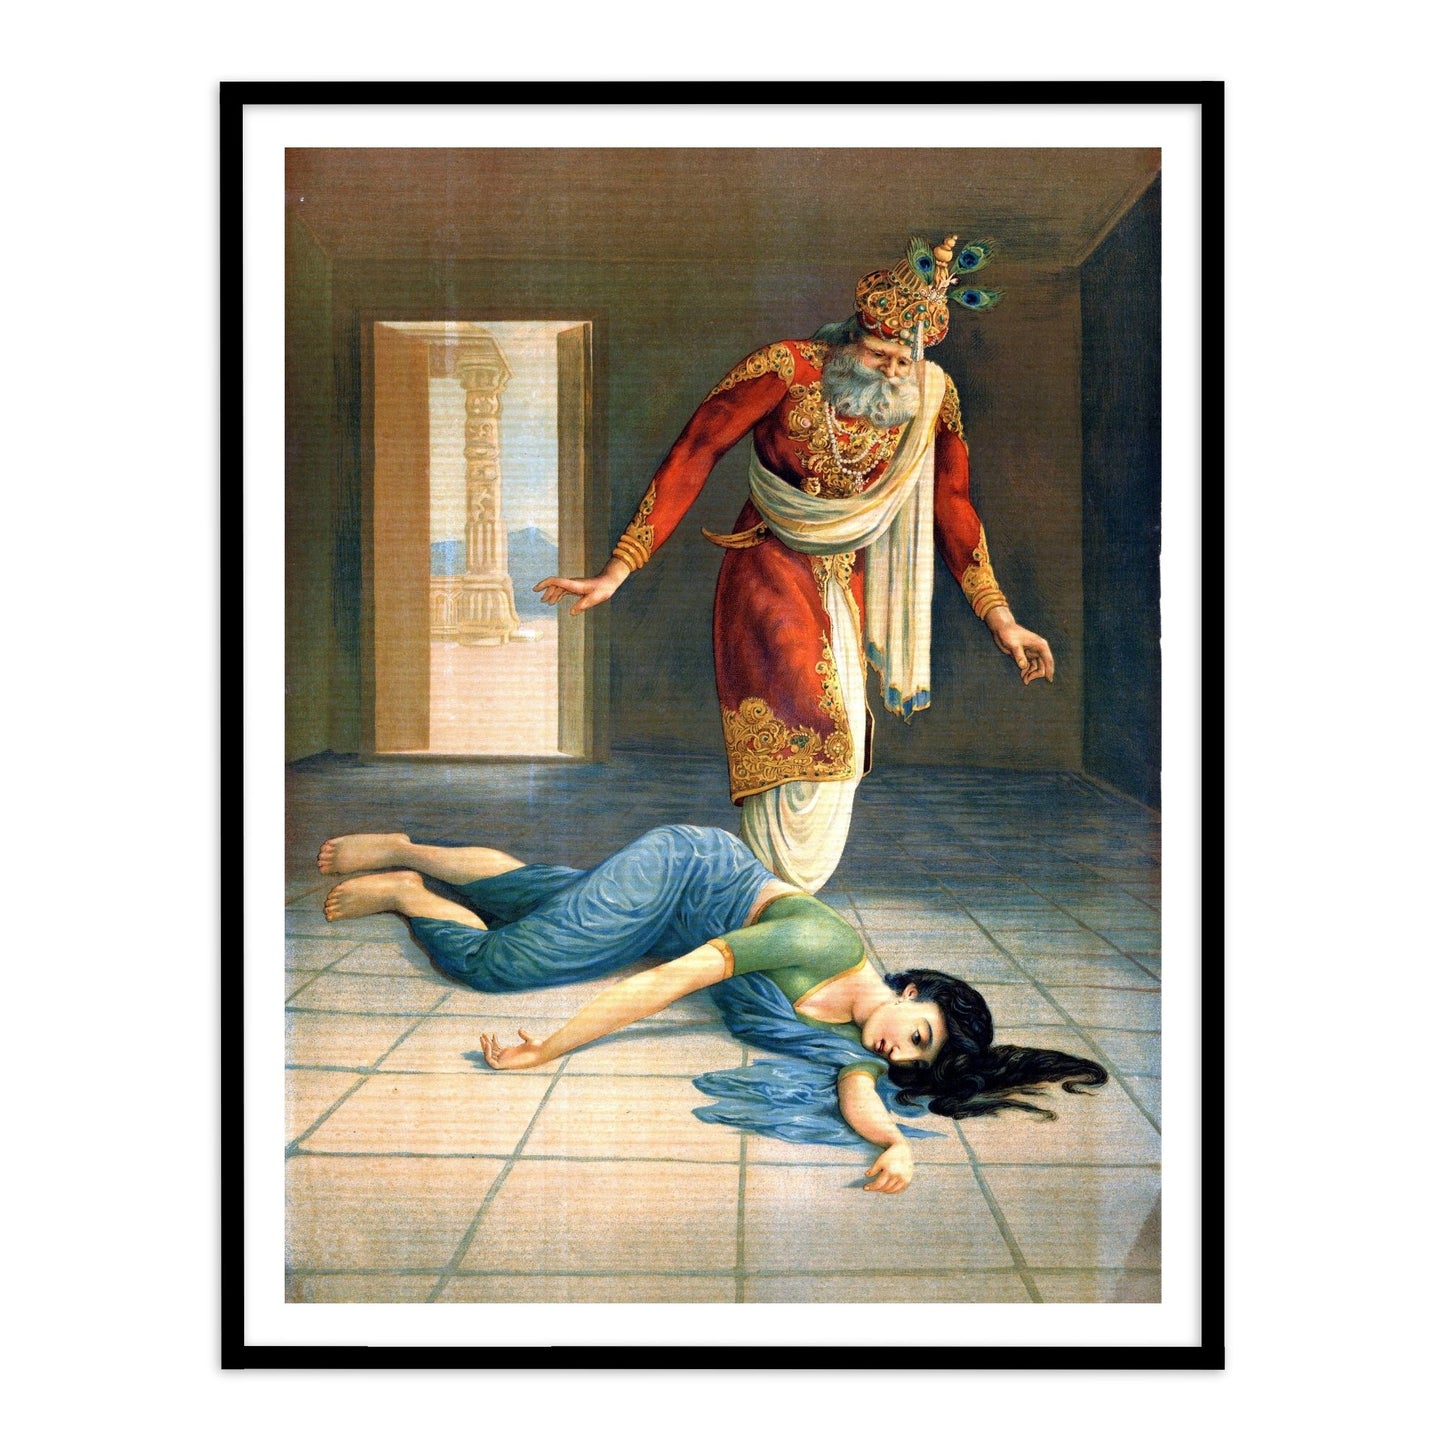 Kaikeyi demands that Dasharatha banish Rama from Ayodhya by Raja Ravi Varma Wall Art